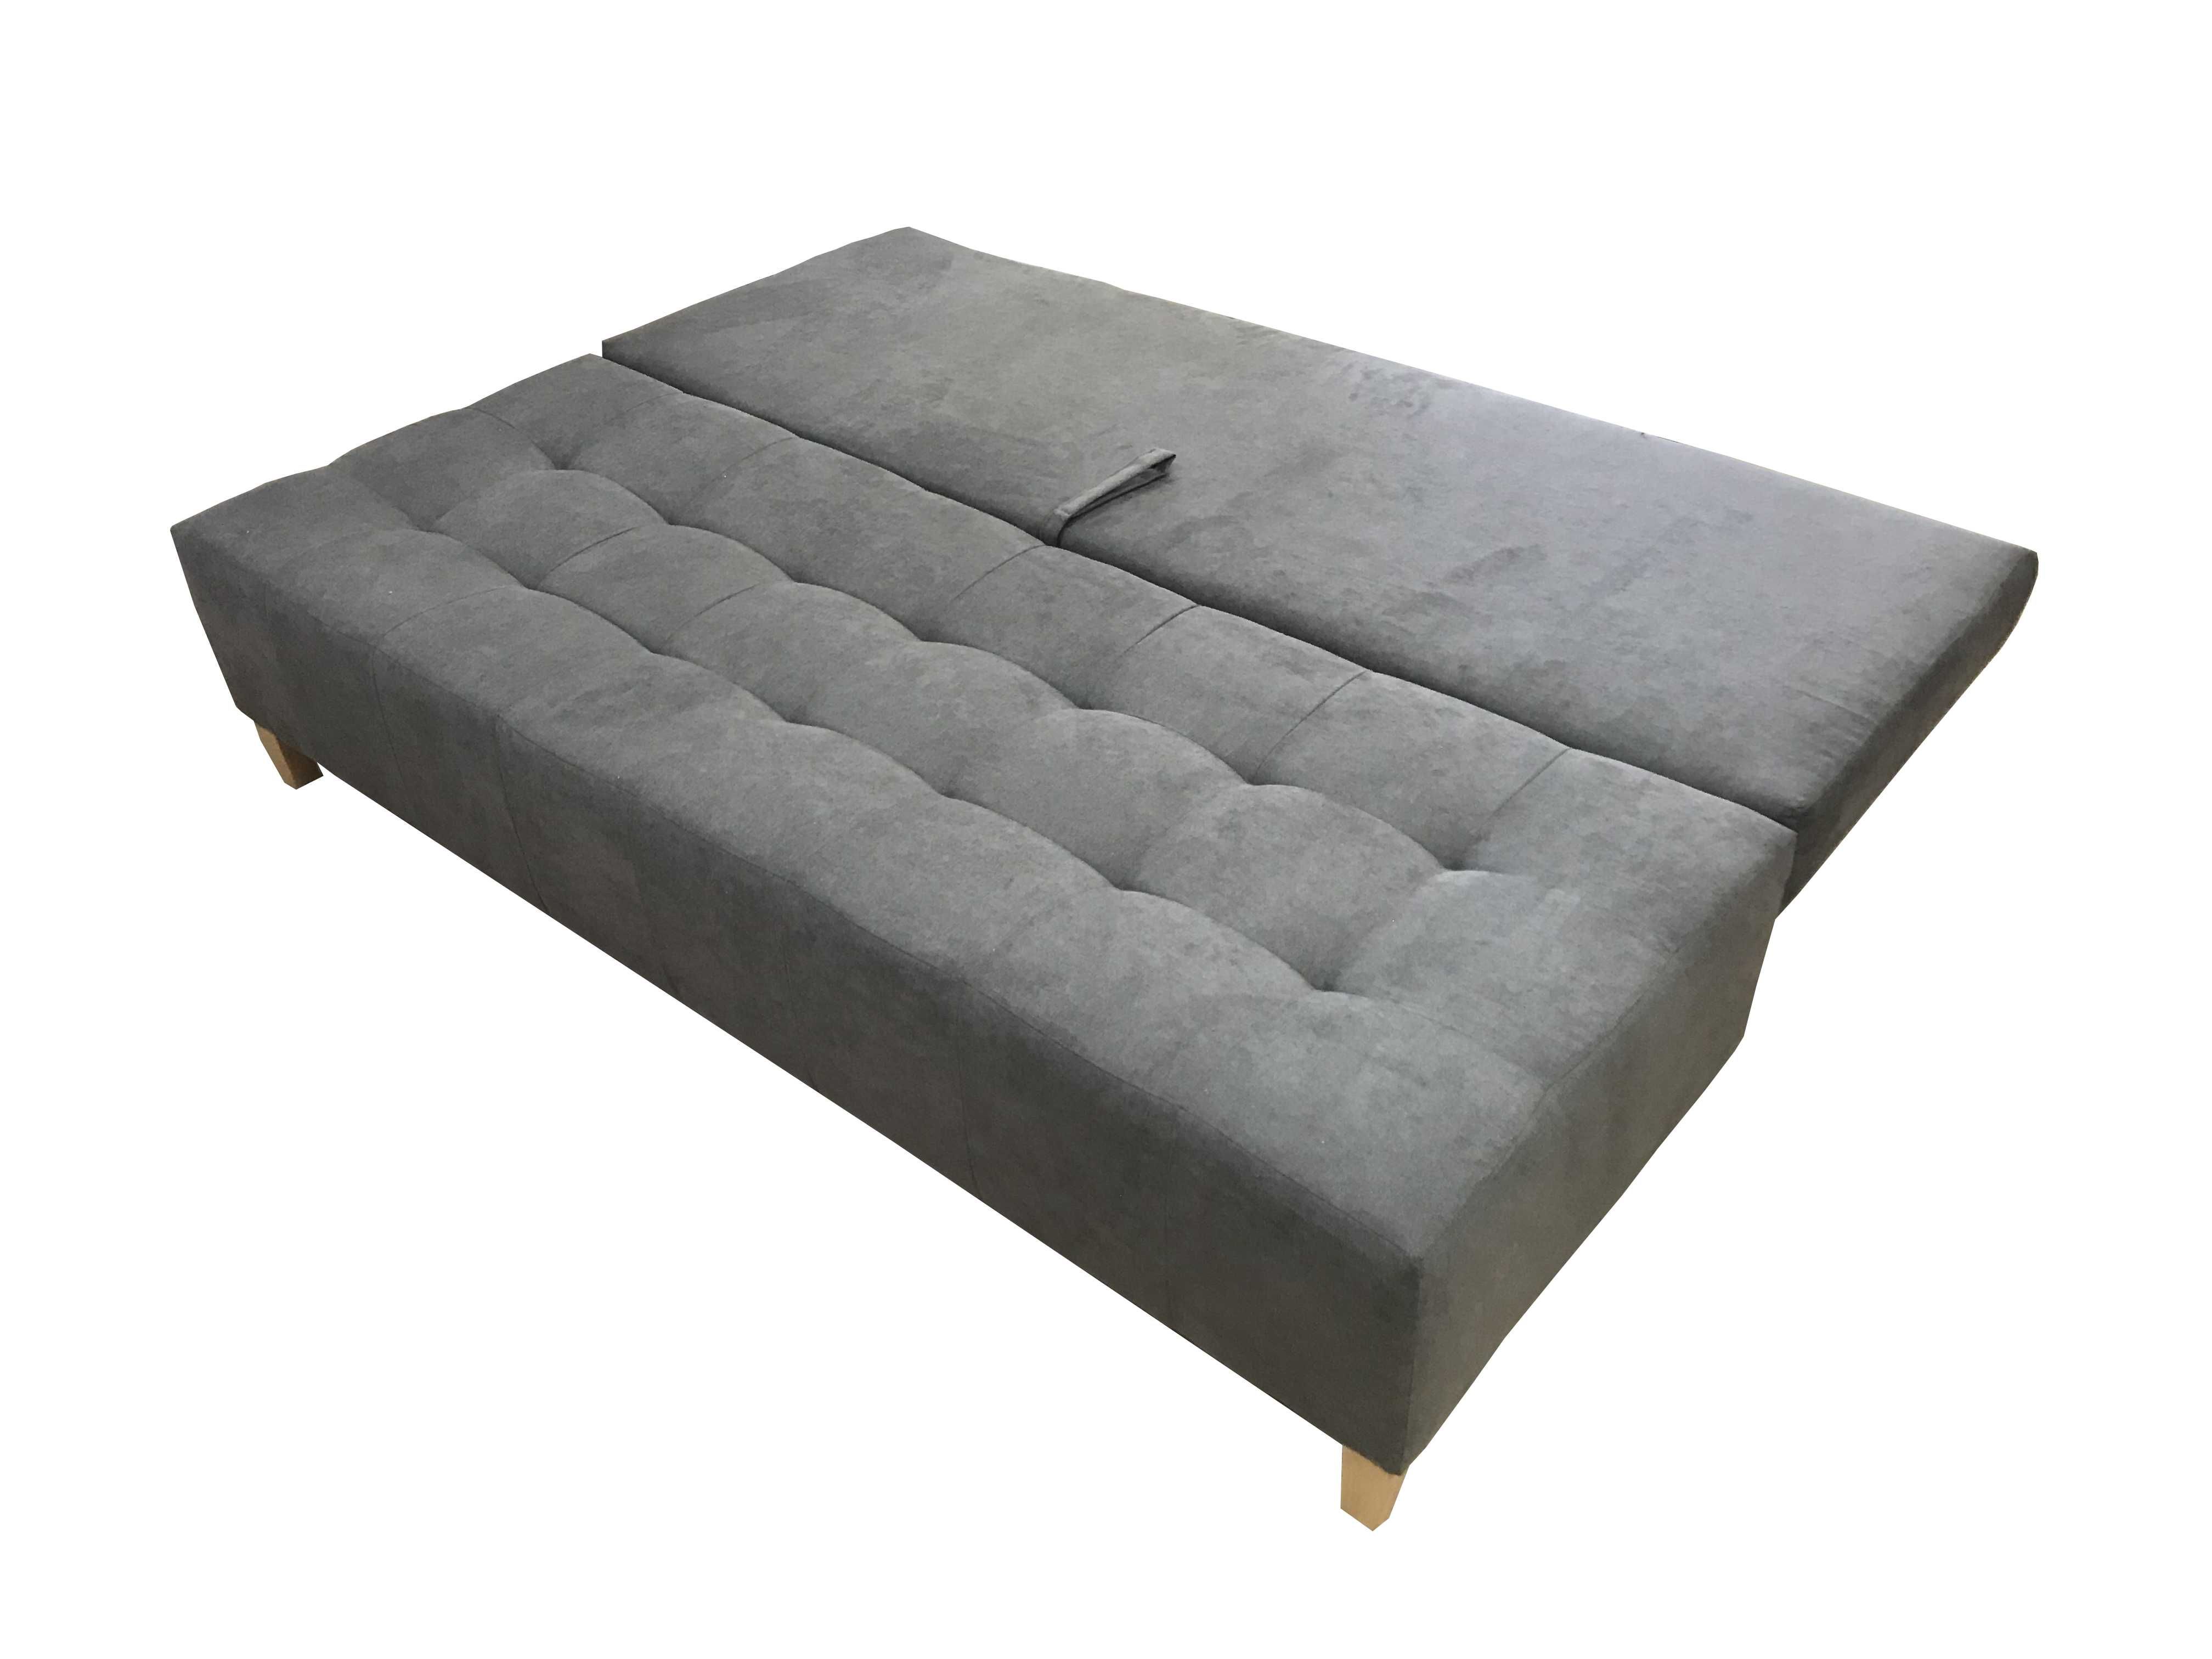 Kanapa sofa funkcja spania PRODUCENT pojemnik DOSTAWA